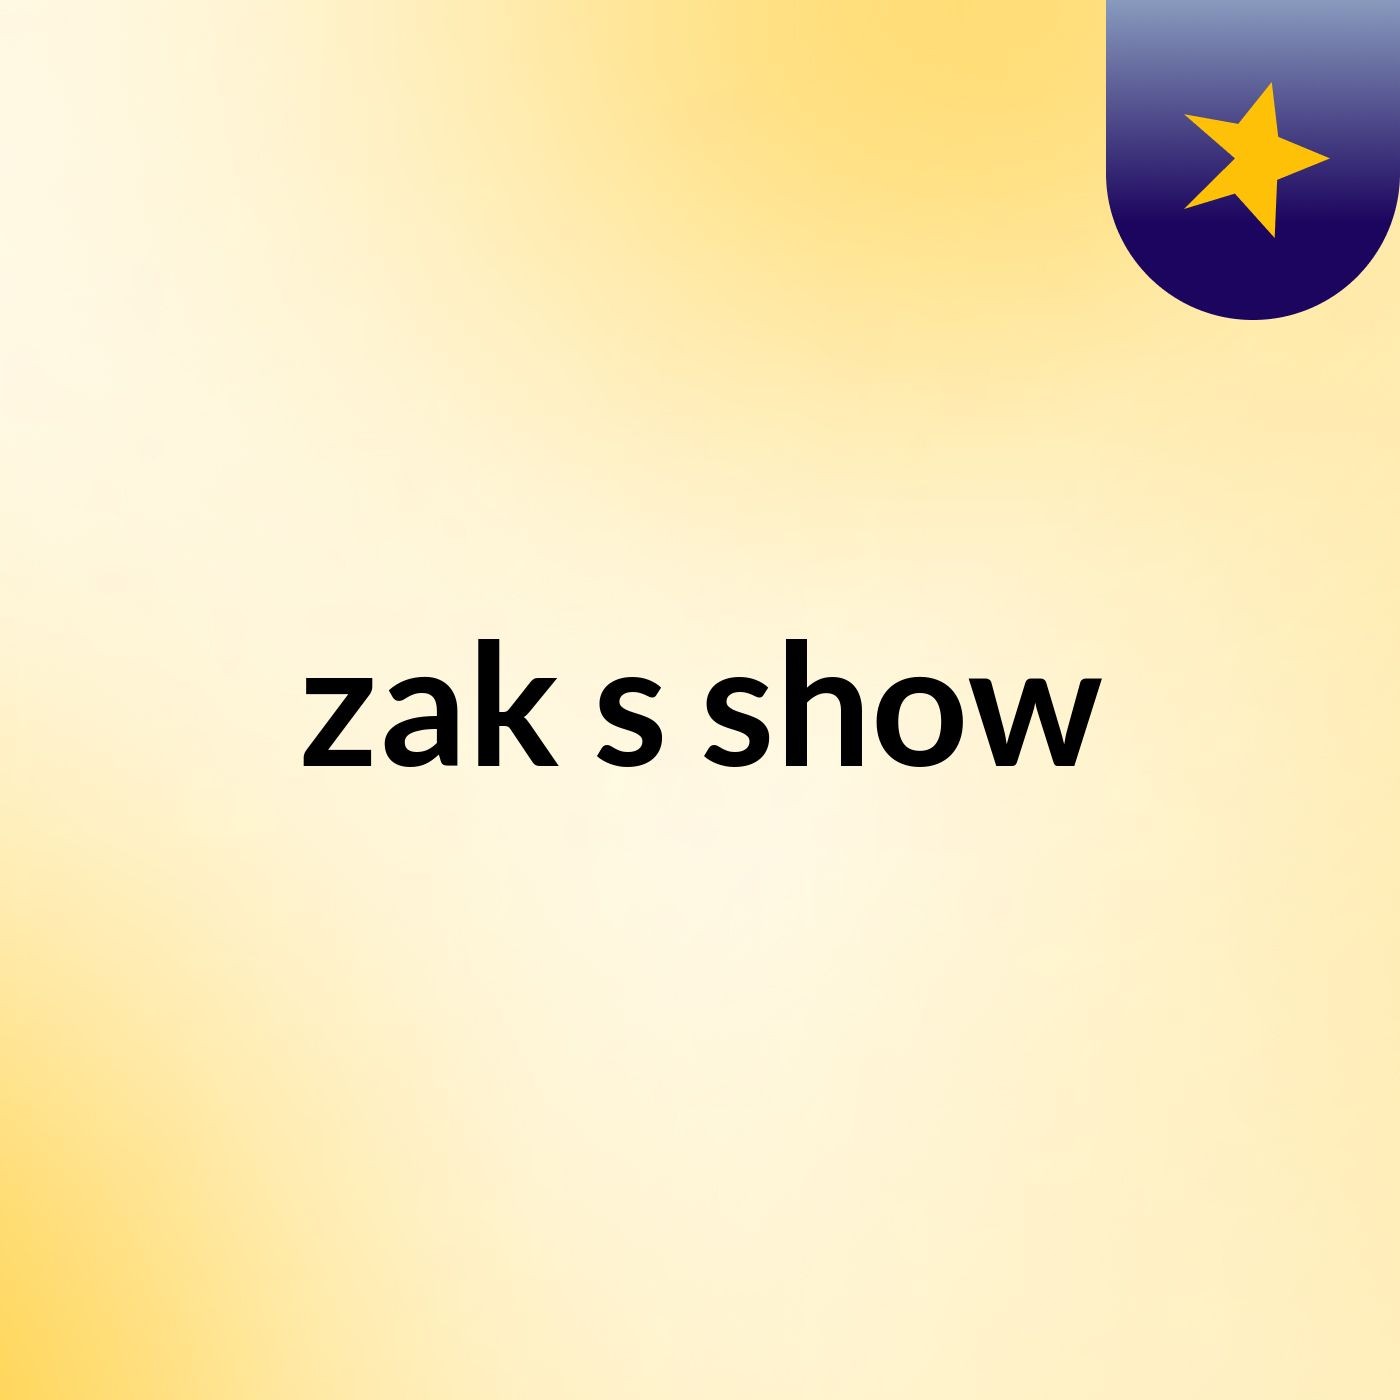 zak's show